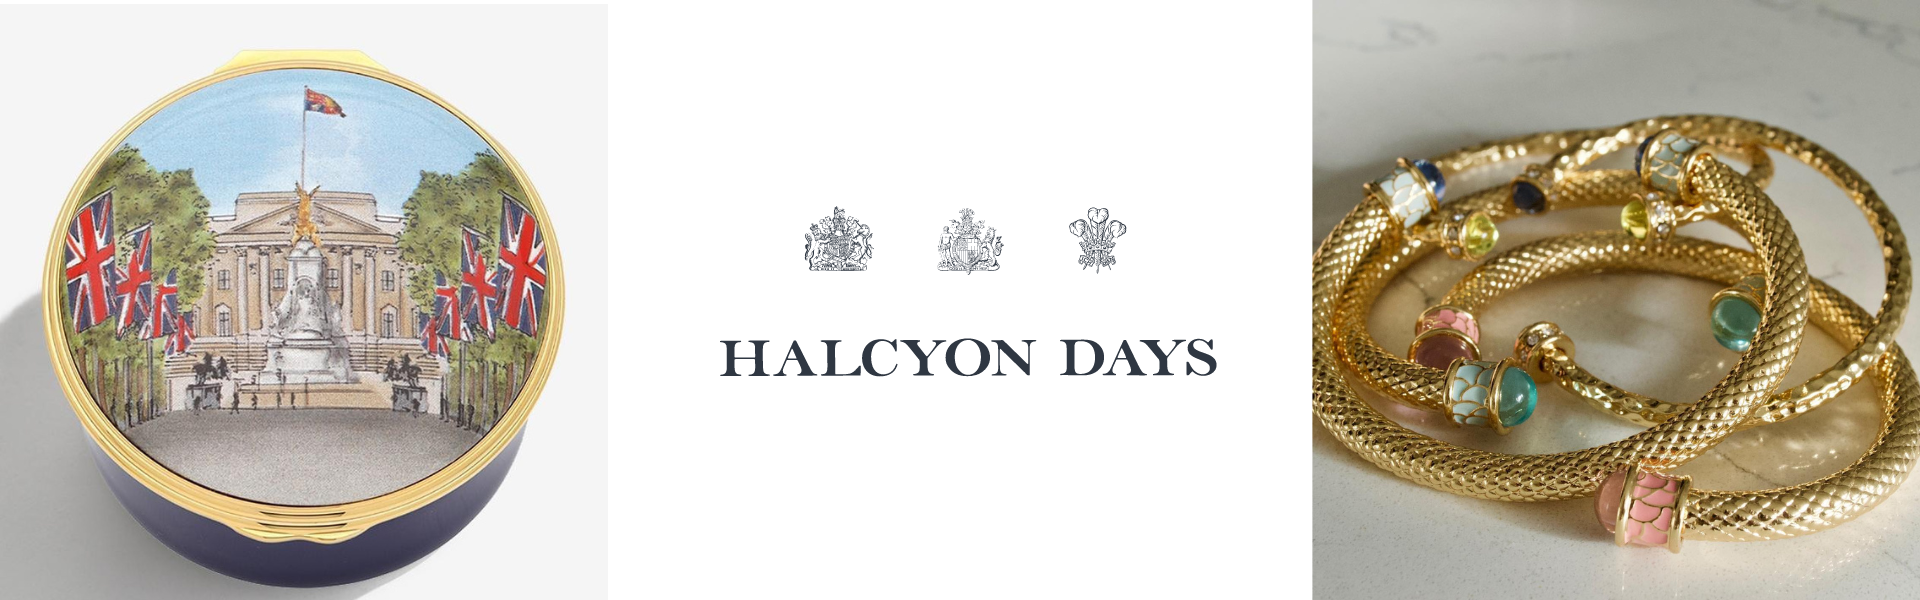 Halycon Days